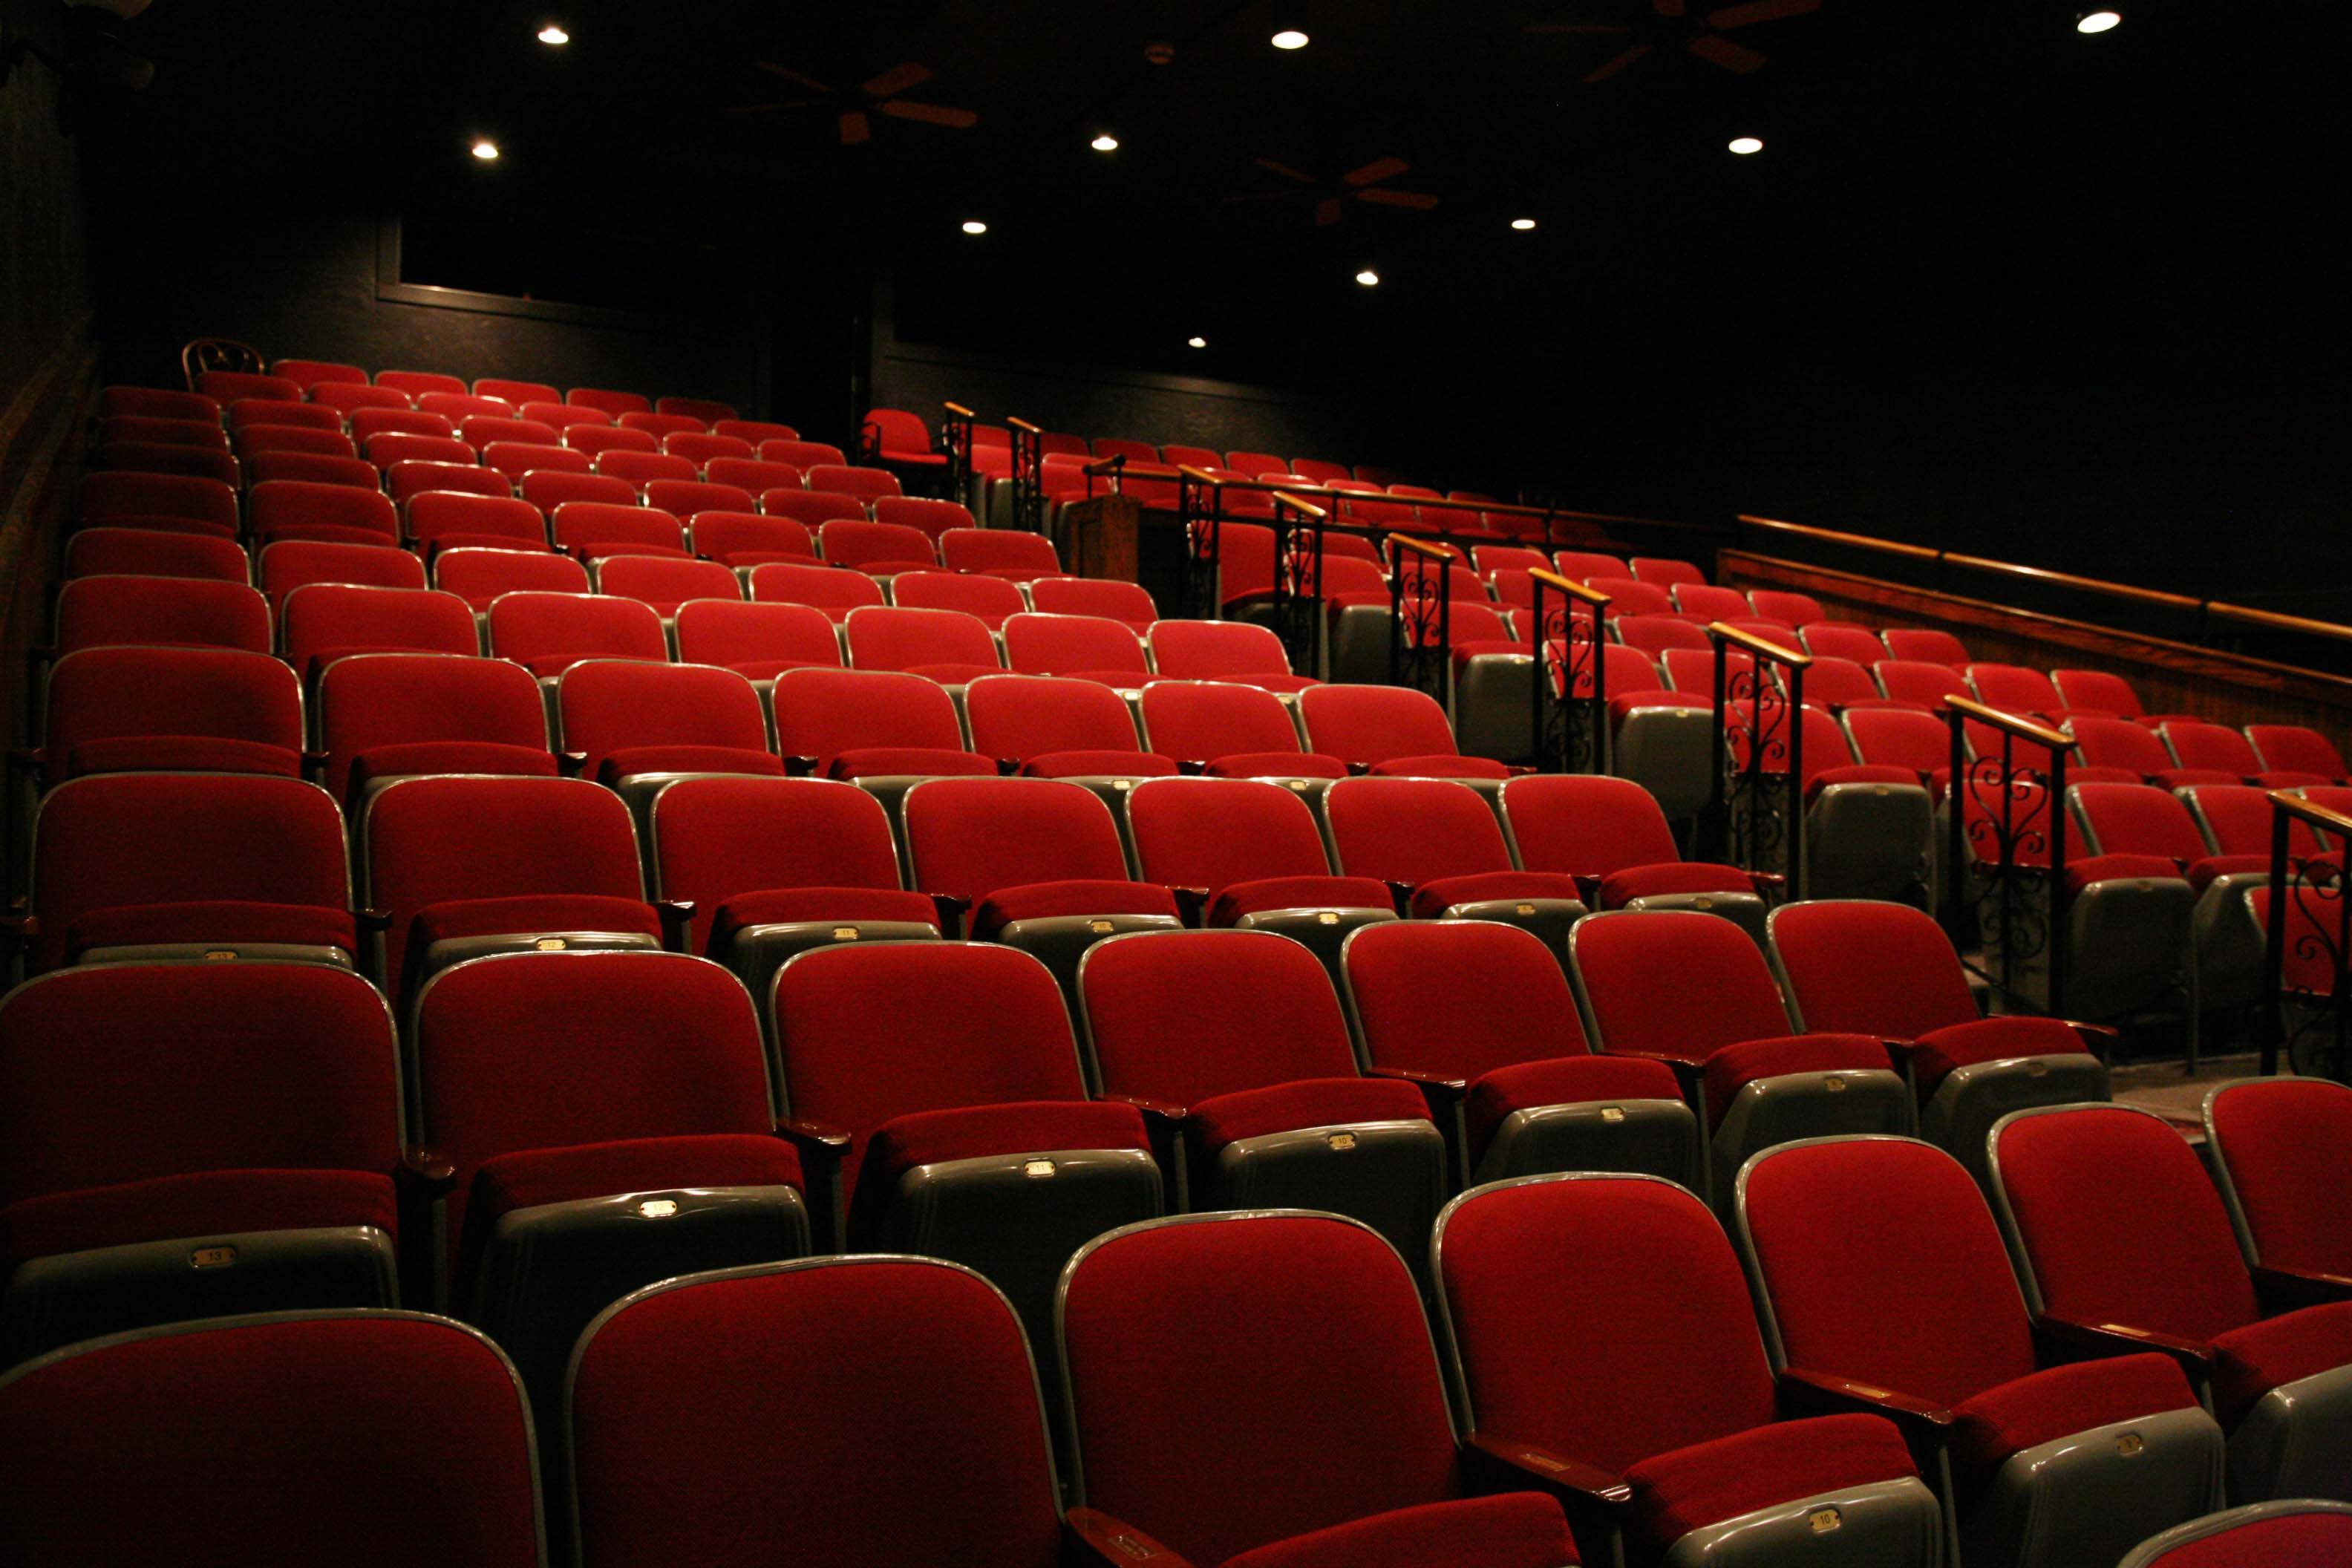 Theater seating. Кинотеатр. Пустой кинотеатр. Зал кинотеатра. Театр кинотеатр.